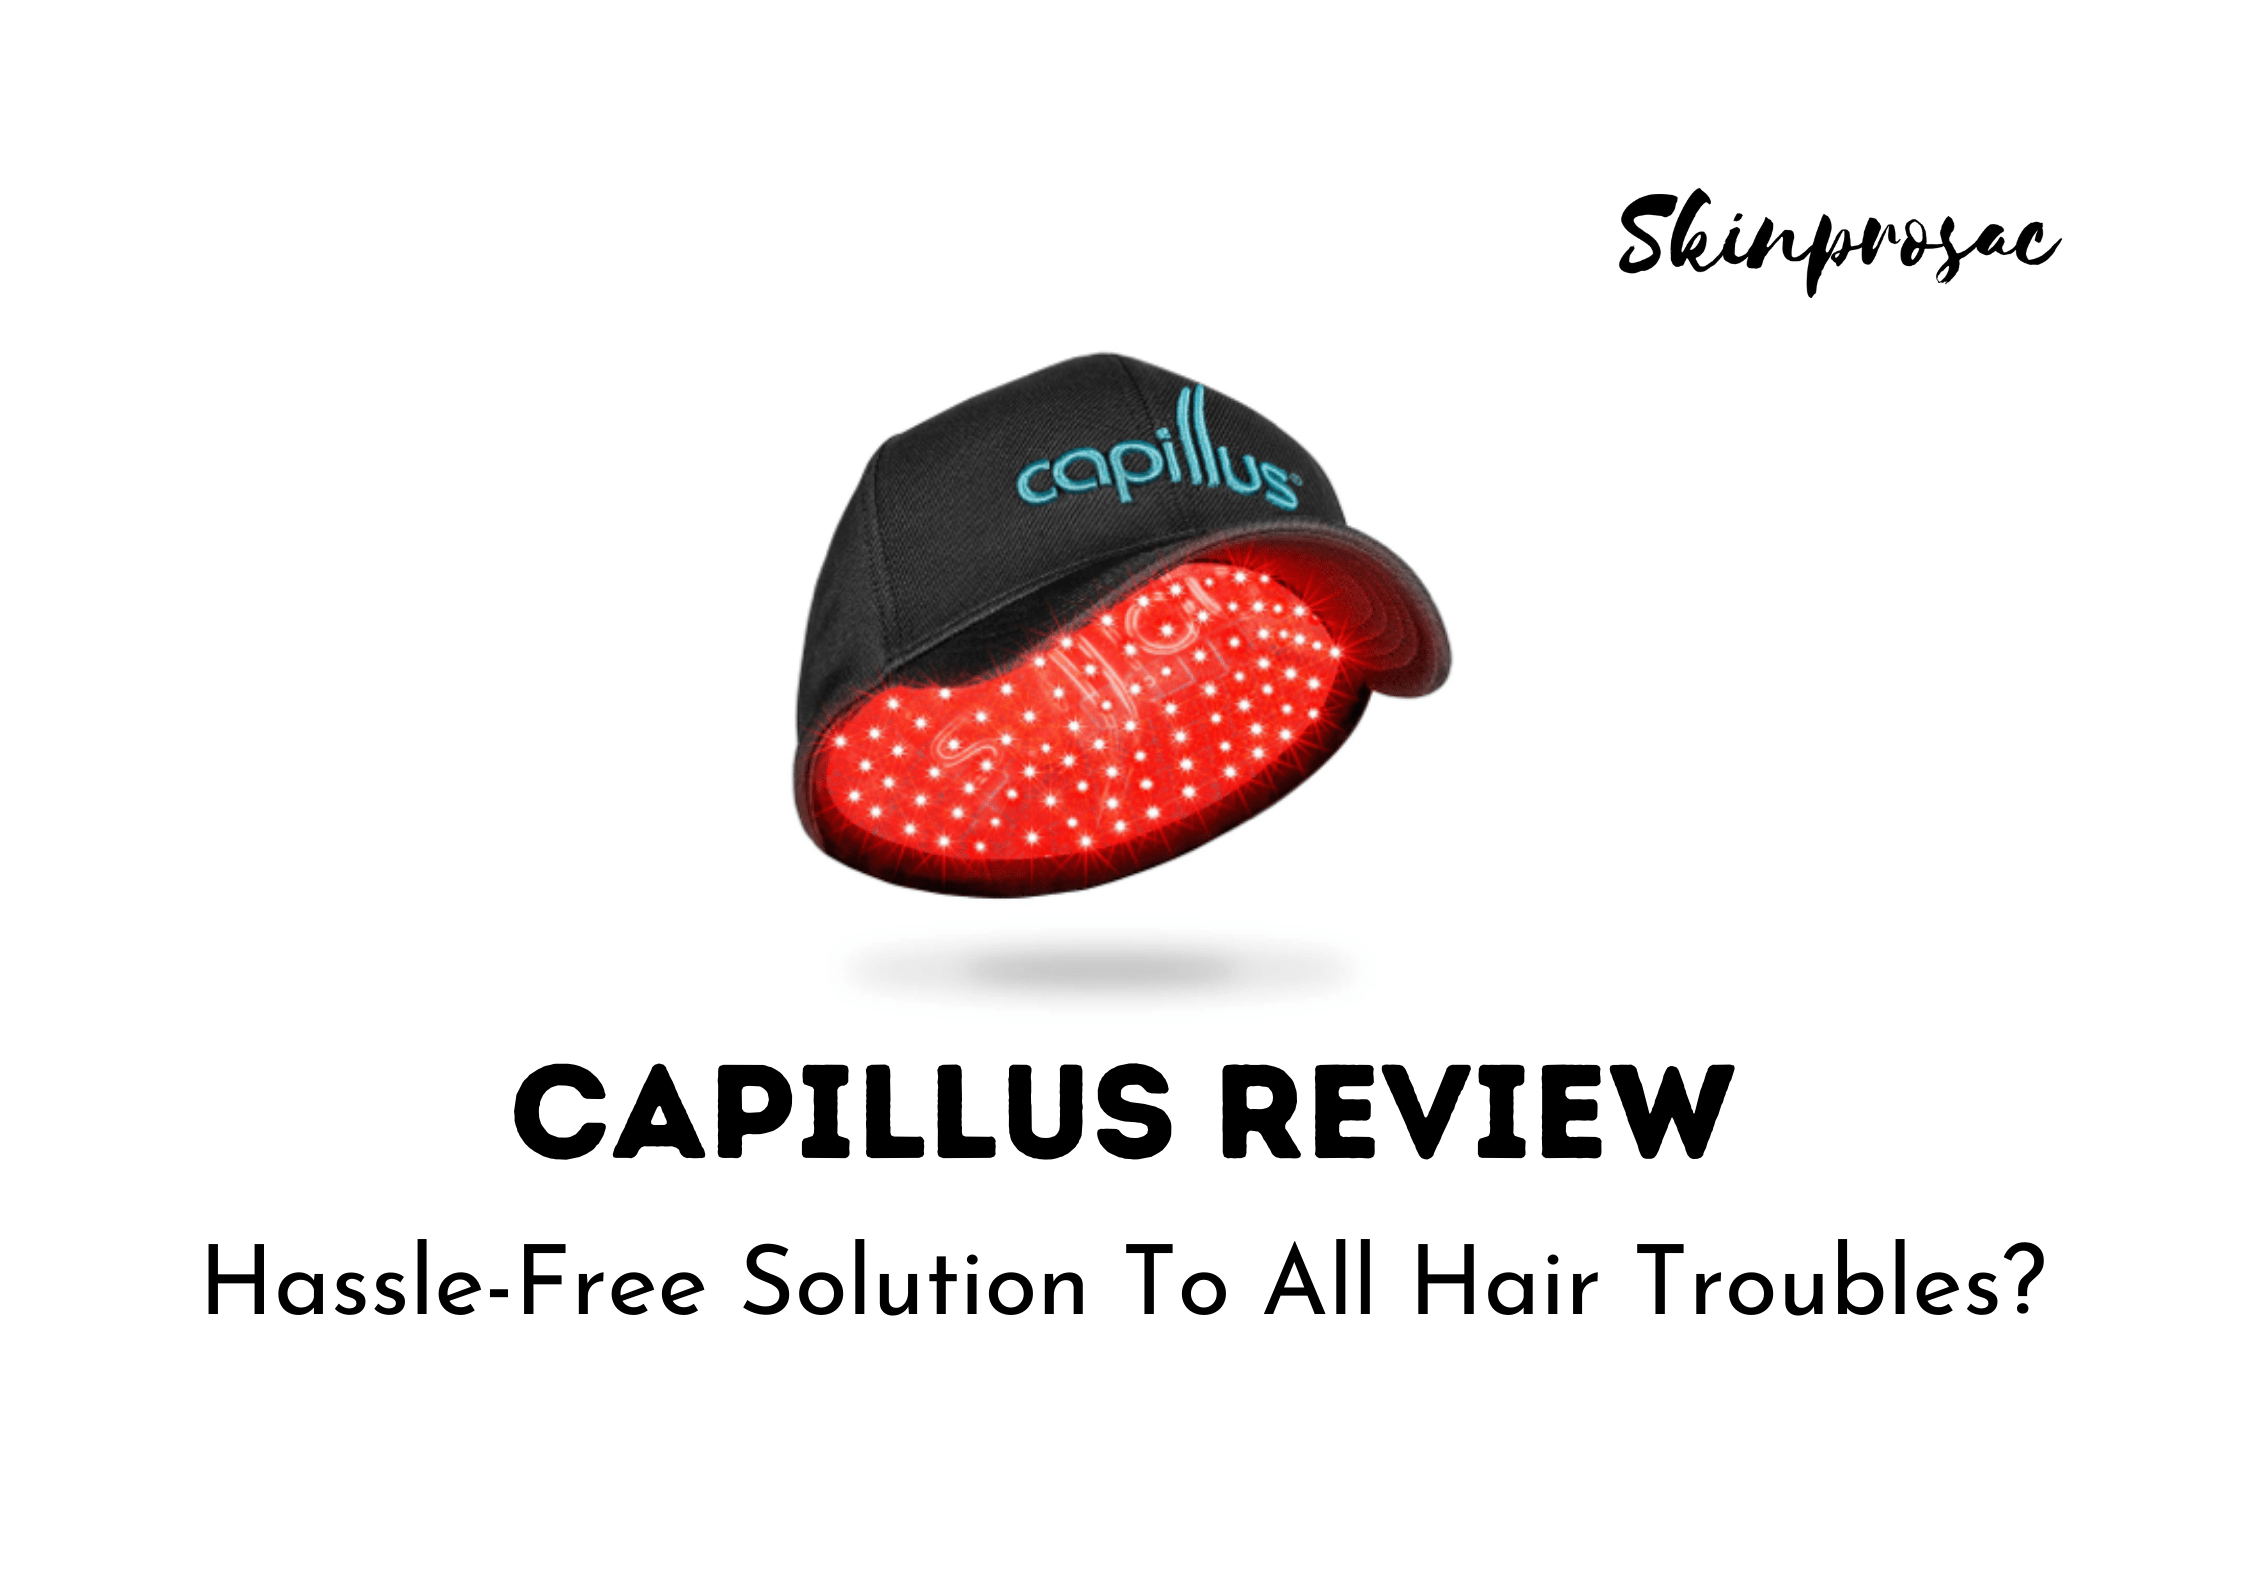 capillus Review